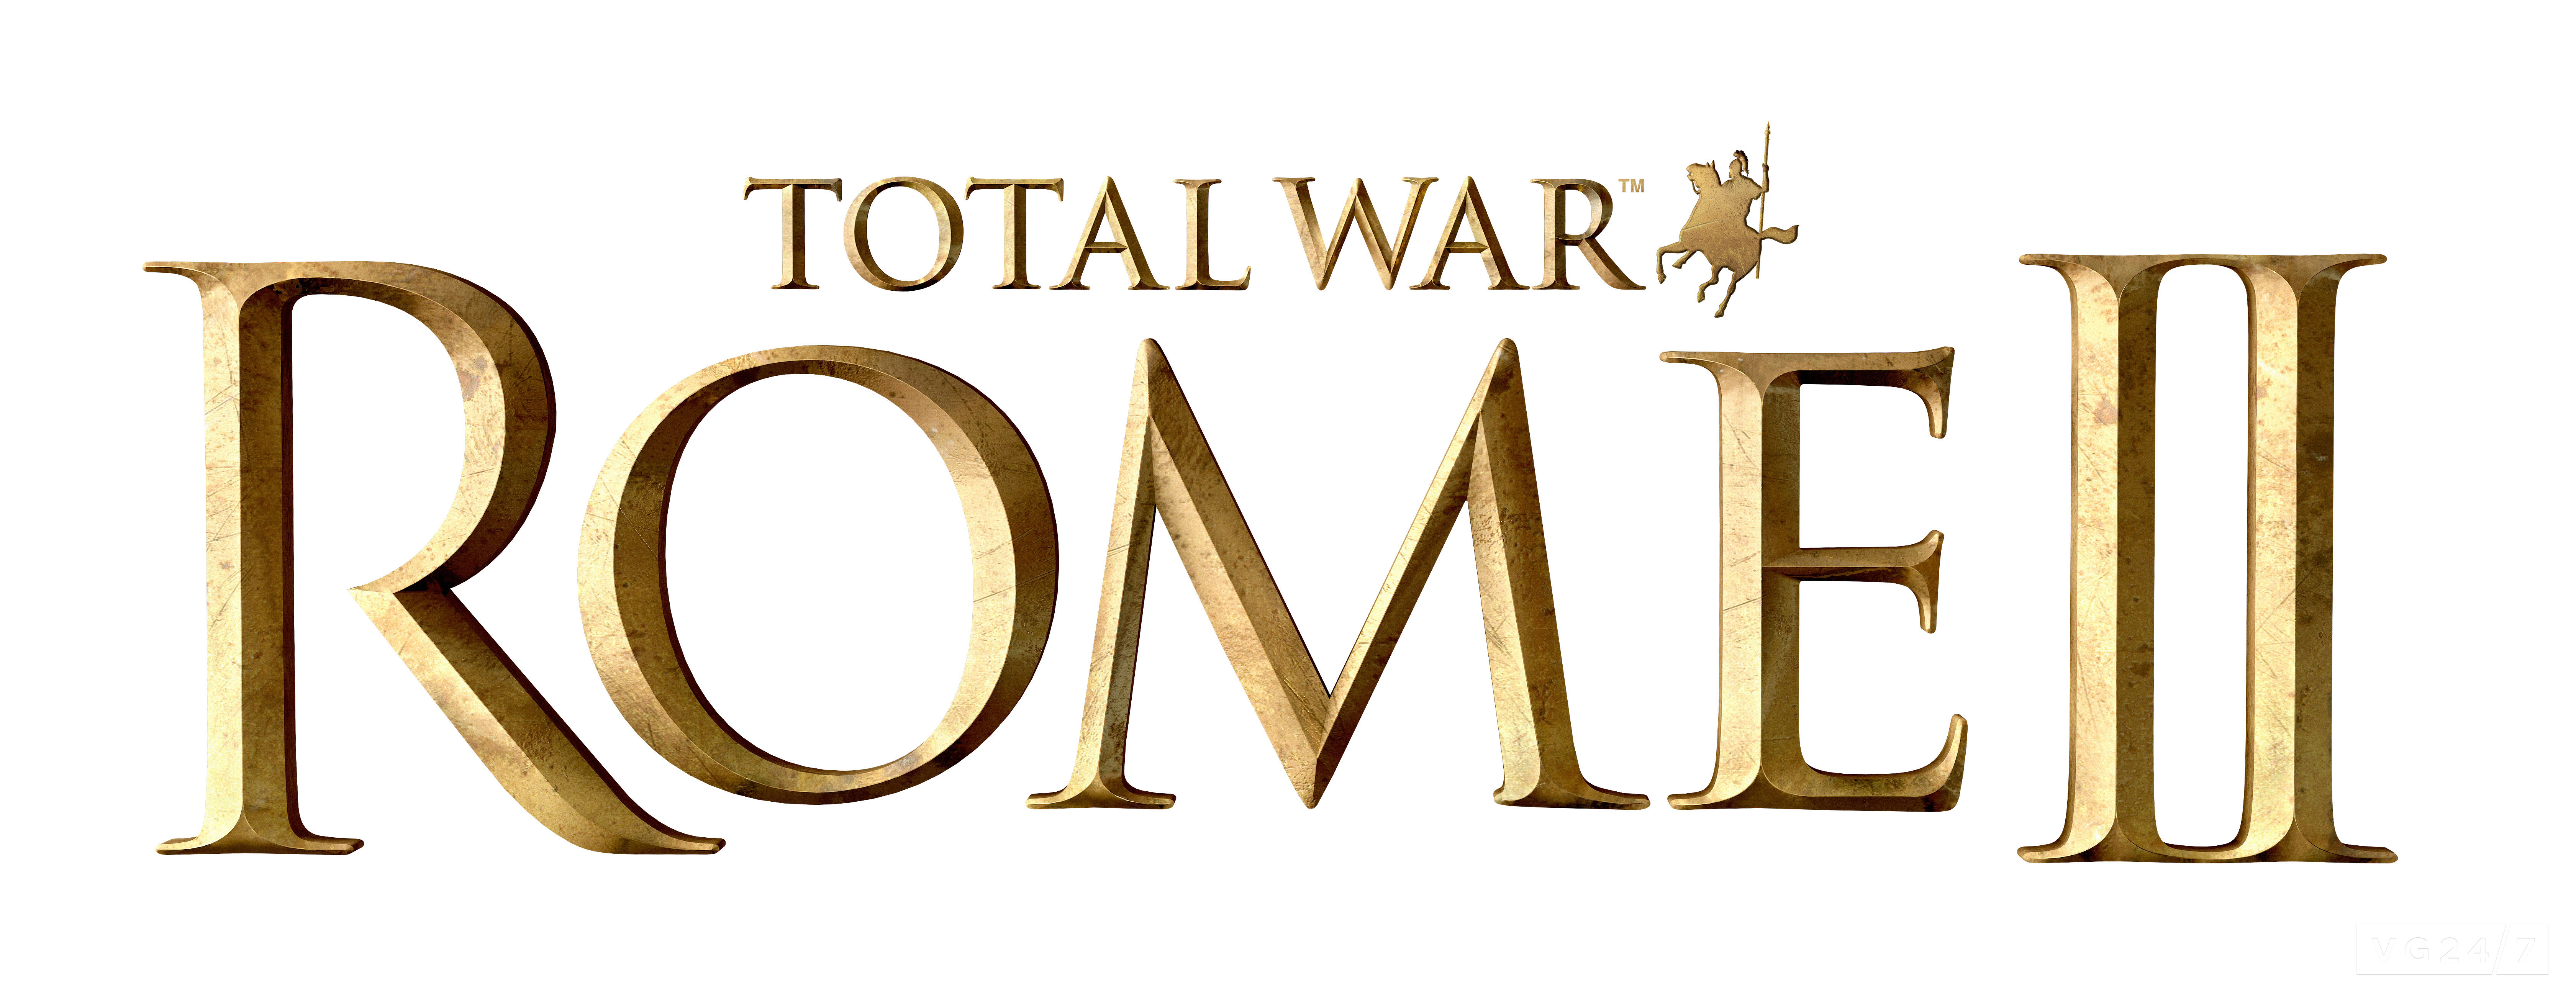 Total War series « Tales of a Game Designer